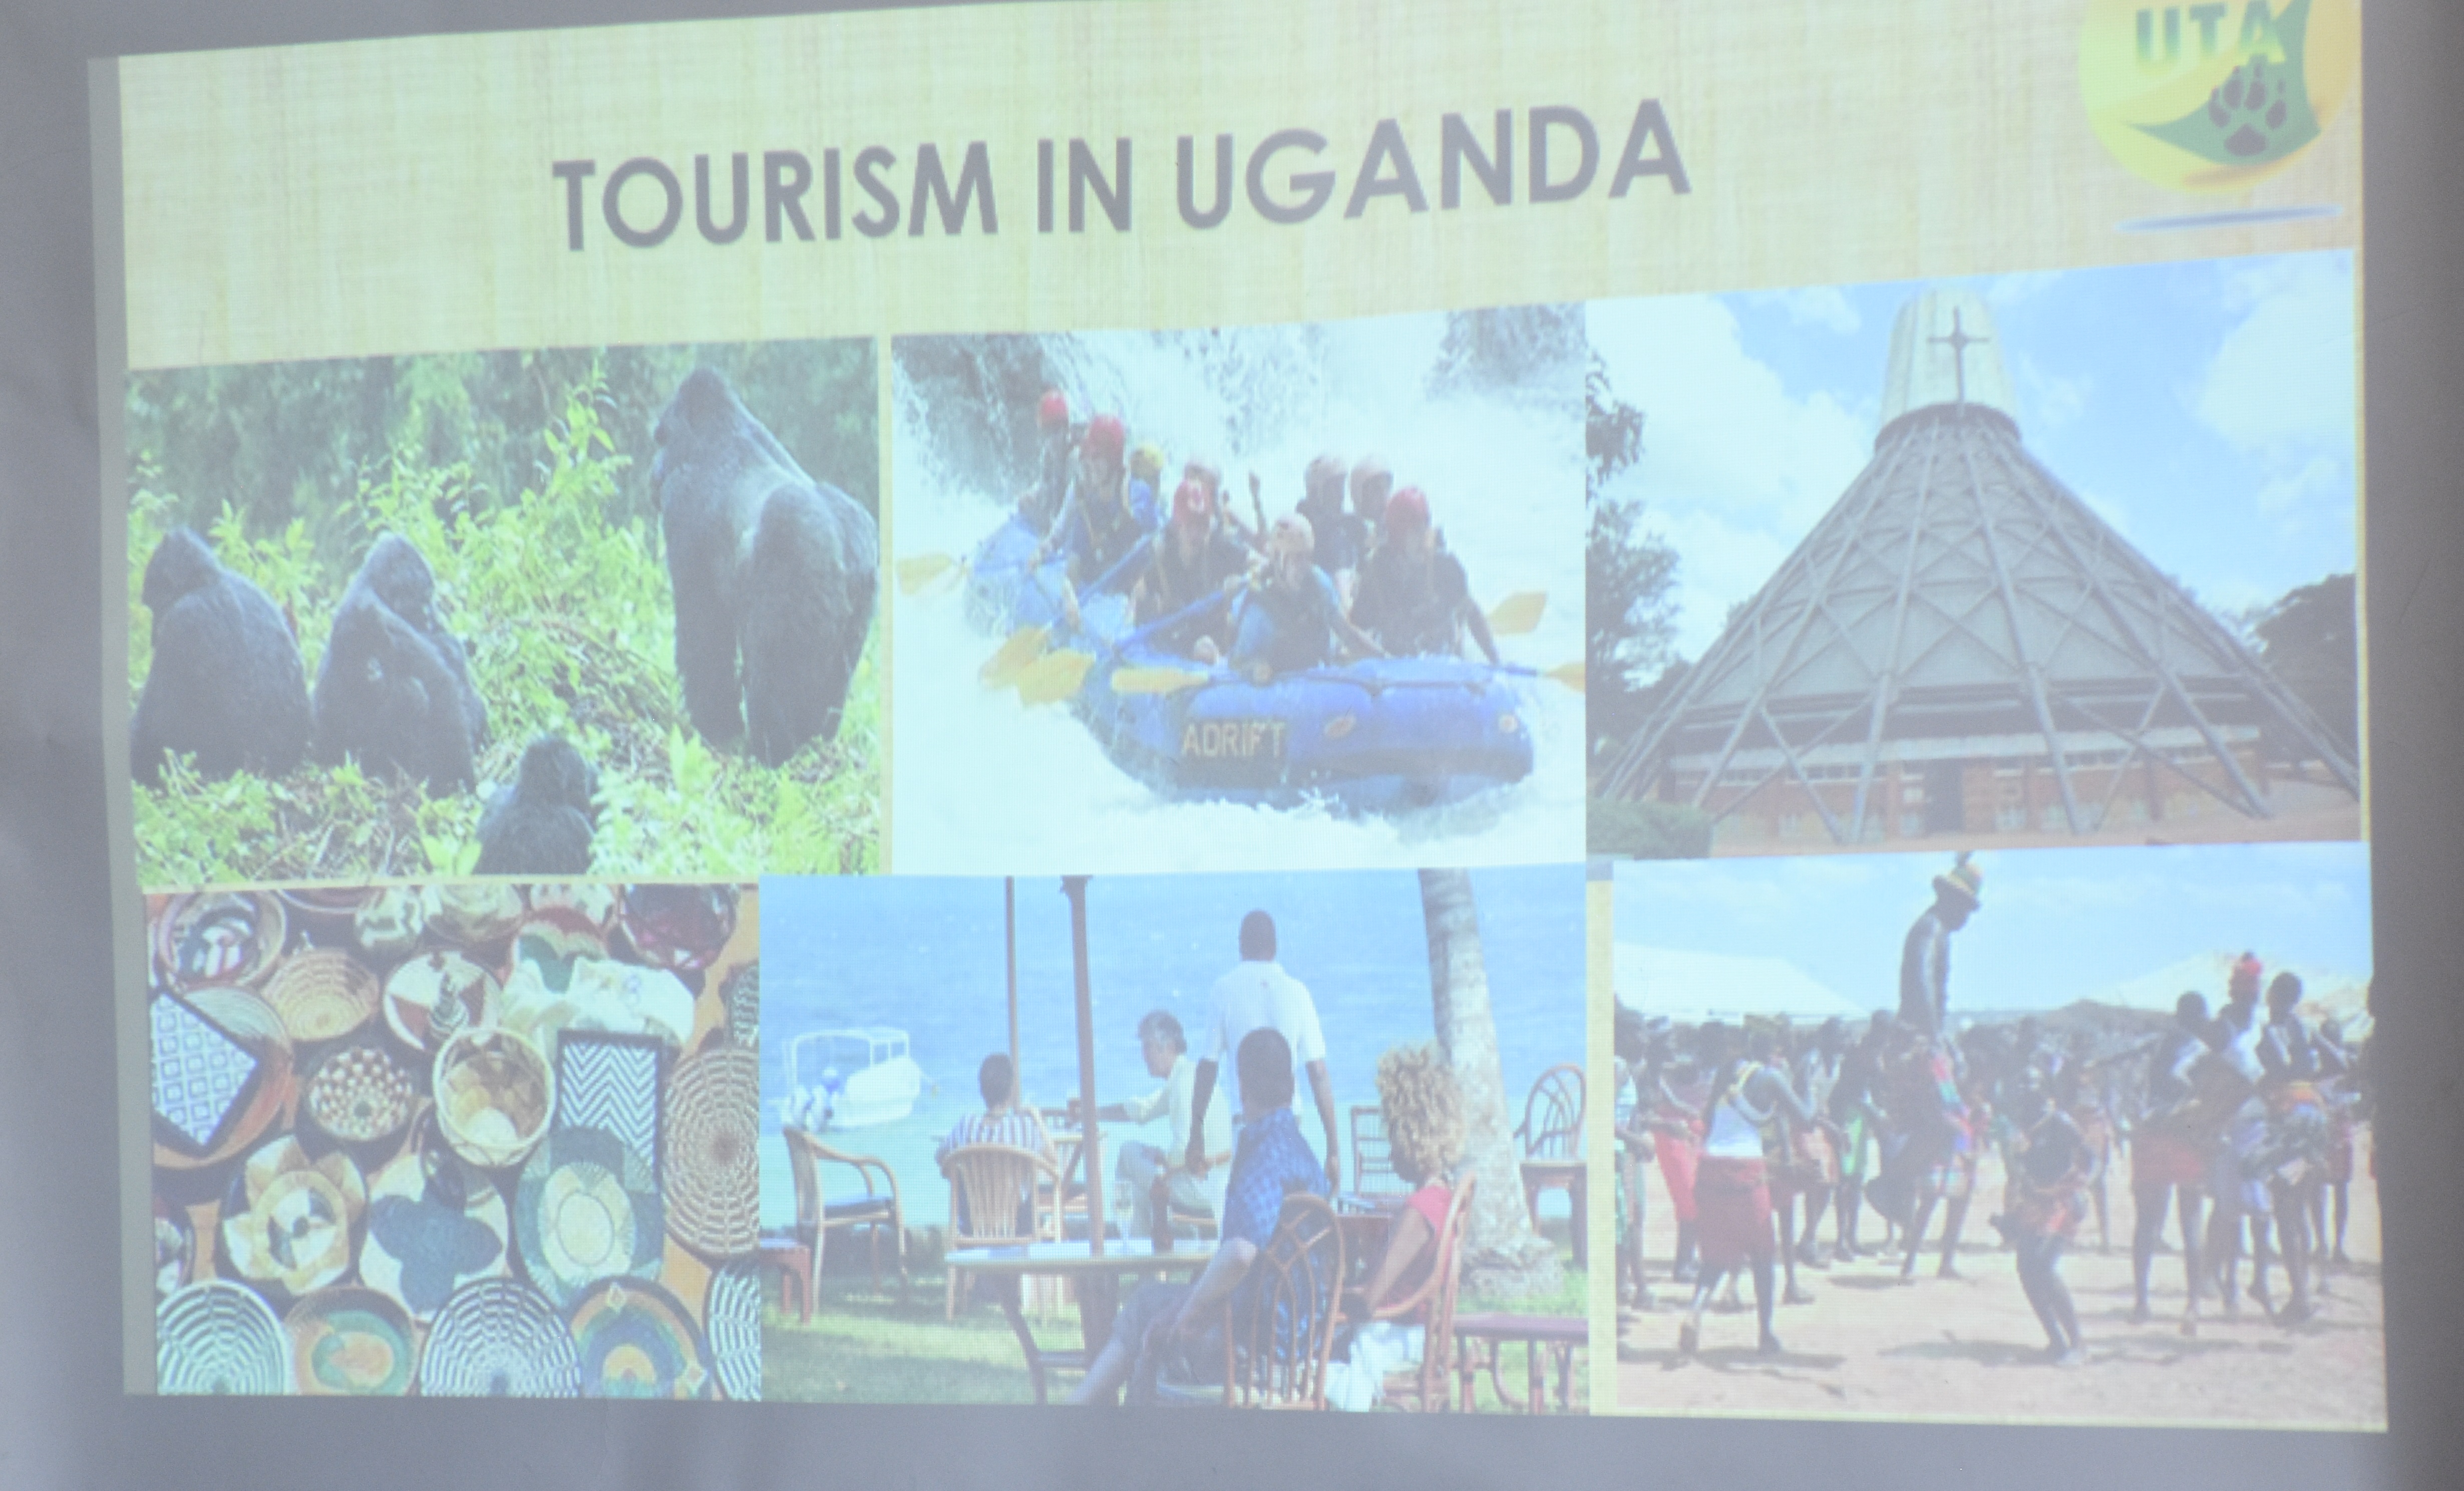 Rocket Health supports tourism in Uganda